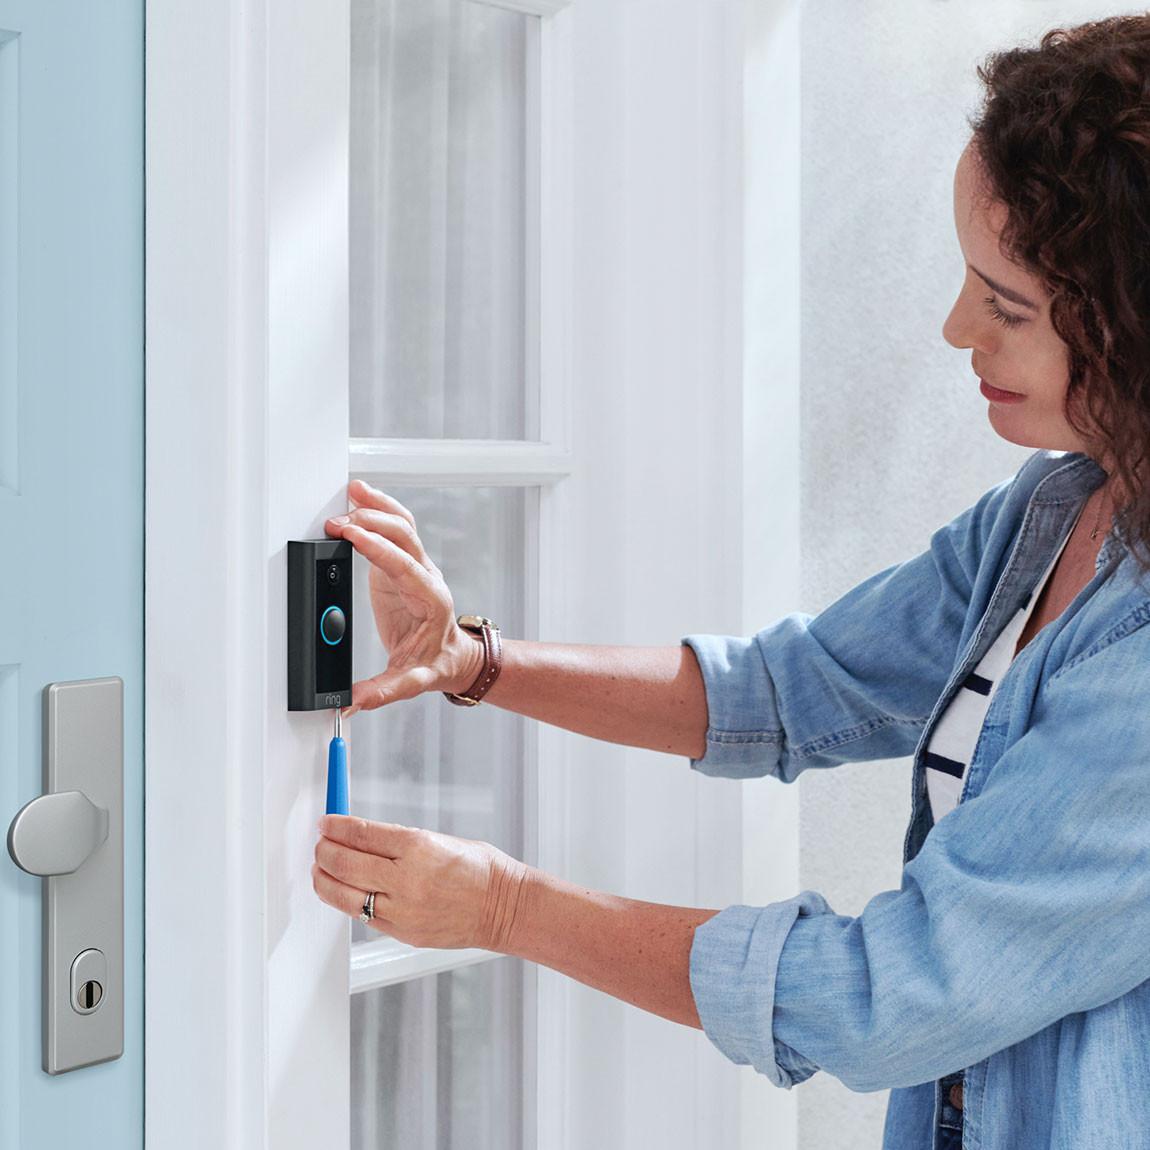 Ring Video Doorbell Wired Installation